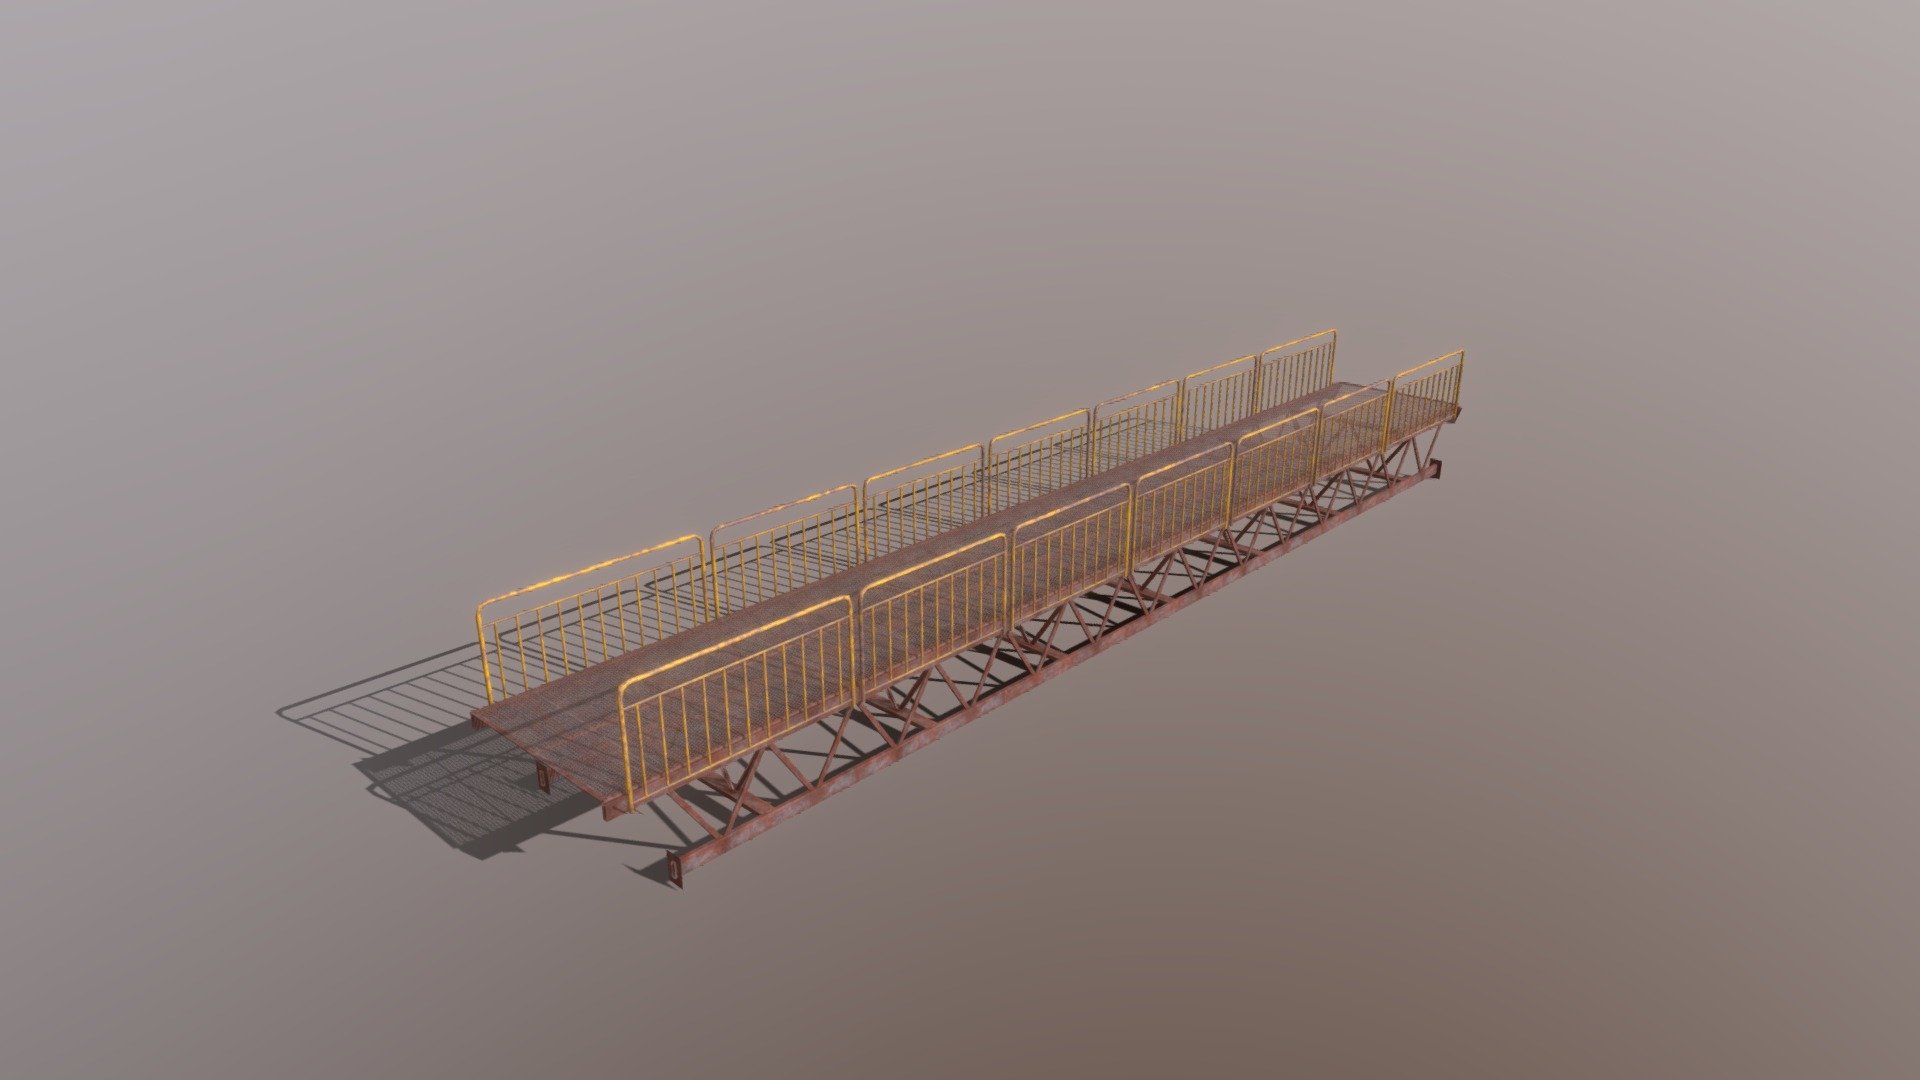 Modular bridge modeled in Maya and textured in Substance Painter for my Cyberpunk City project: https://www.artstation.com/artwork/6bEmAr - Modular Bridge - 3D model by ManlioRF 3d model